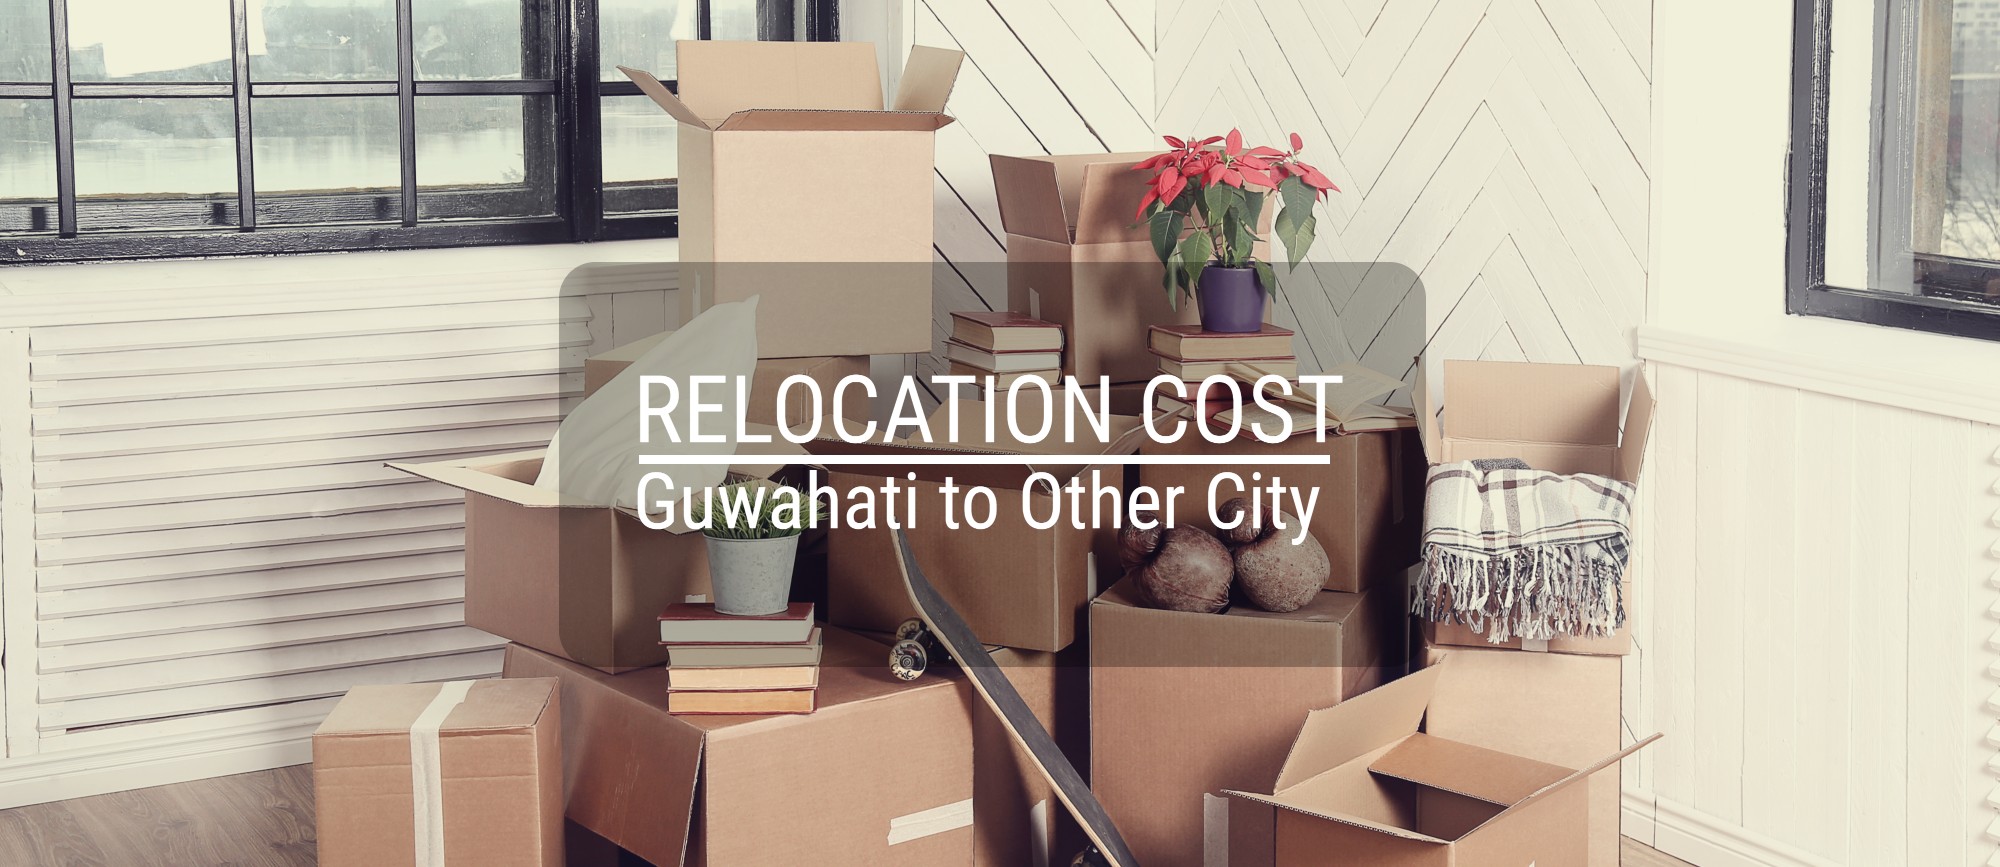 Relocation cost Guwahati